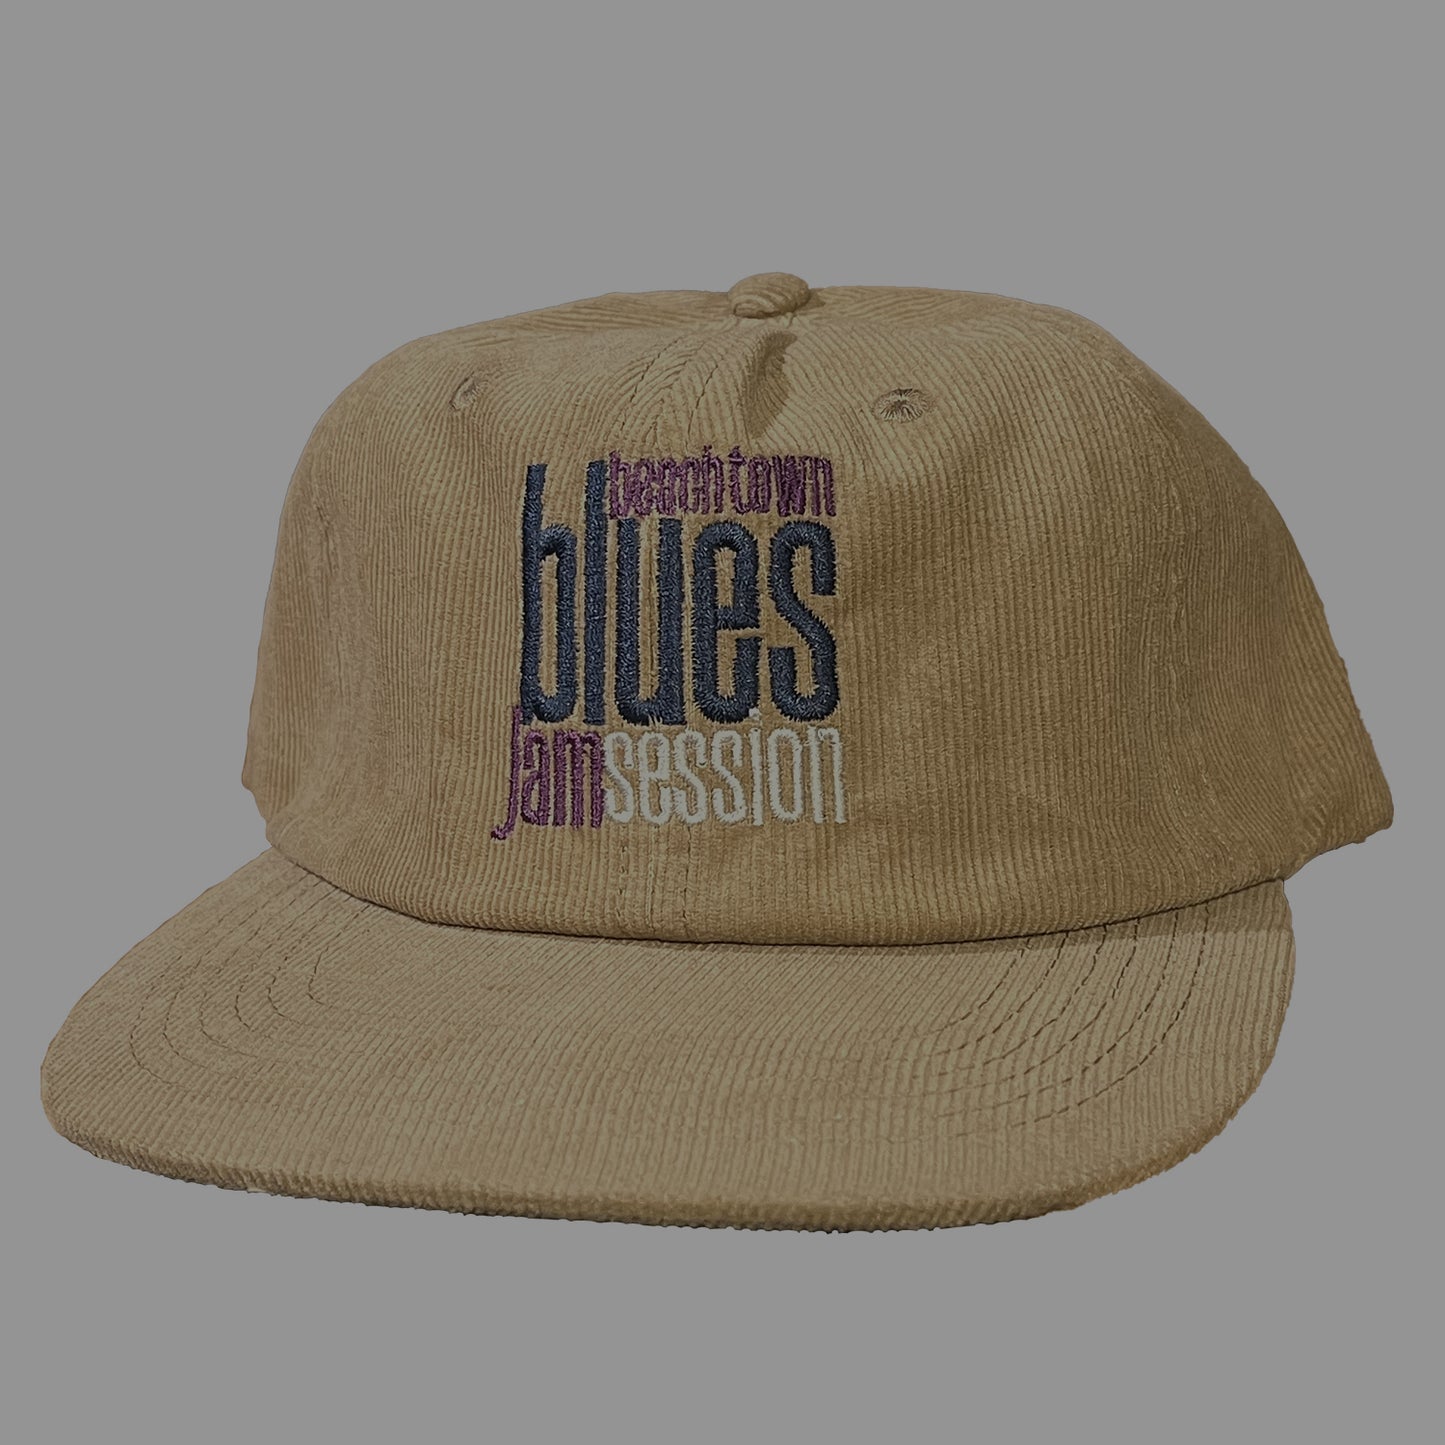 BEACHTOWN BLUES JAM SESSION CORDUROY SNAPBACK CAP